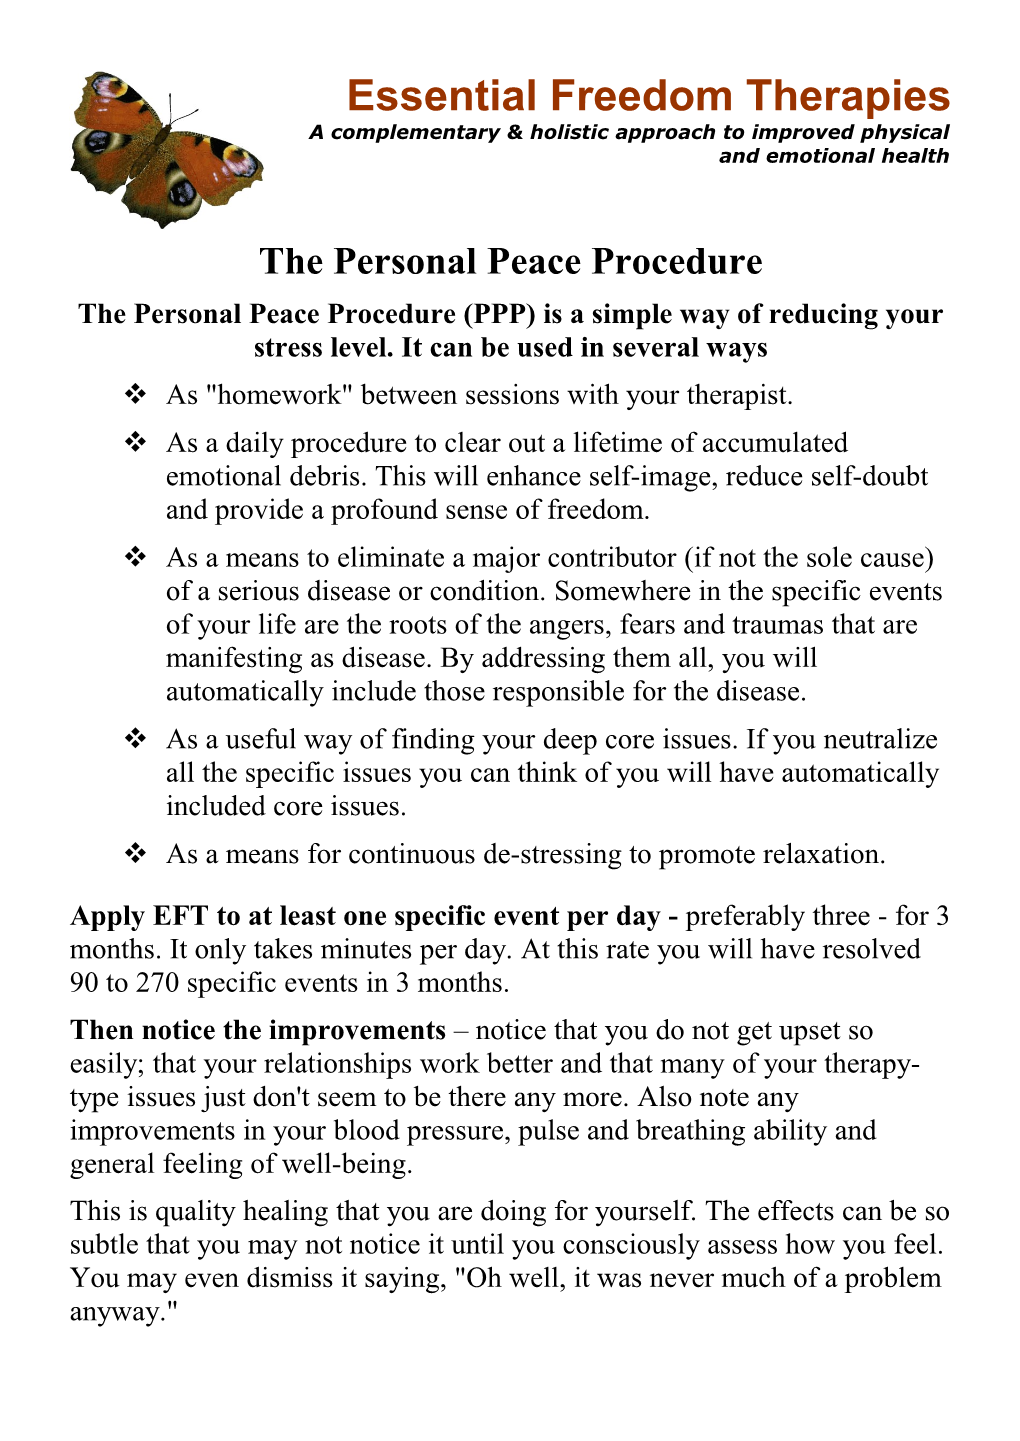 The Personal Peace Procedure